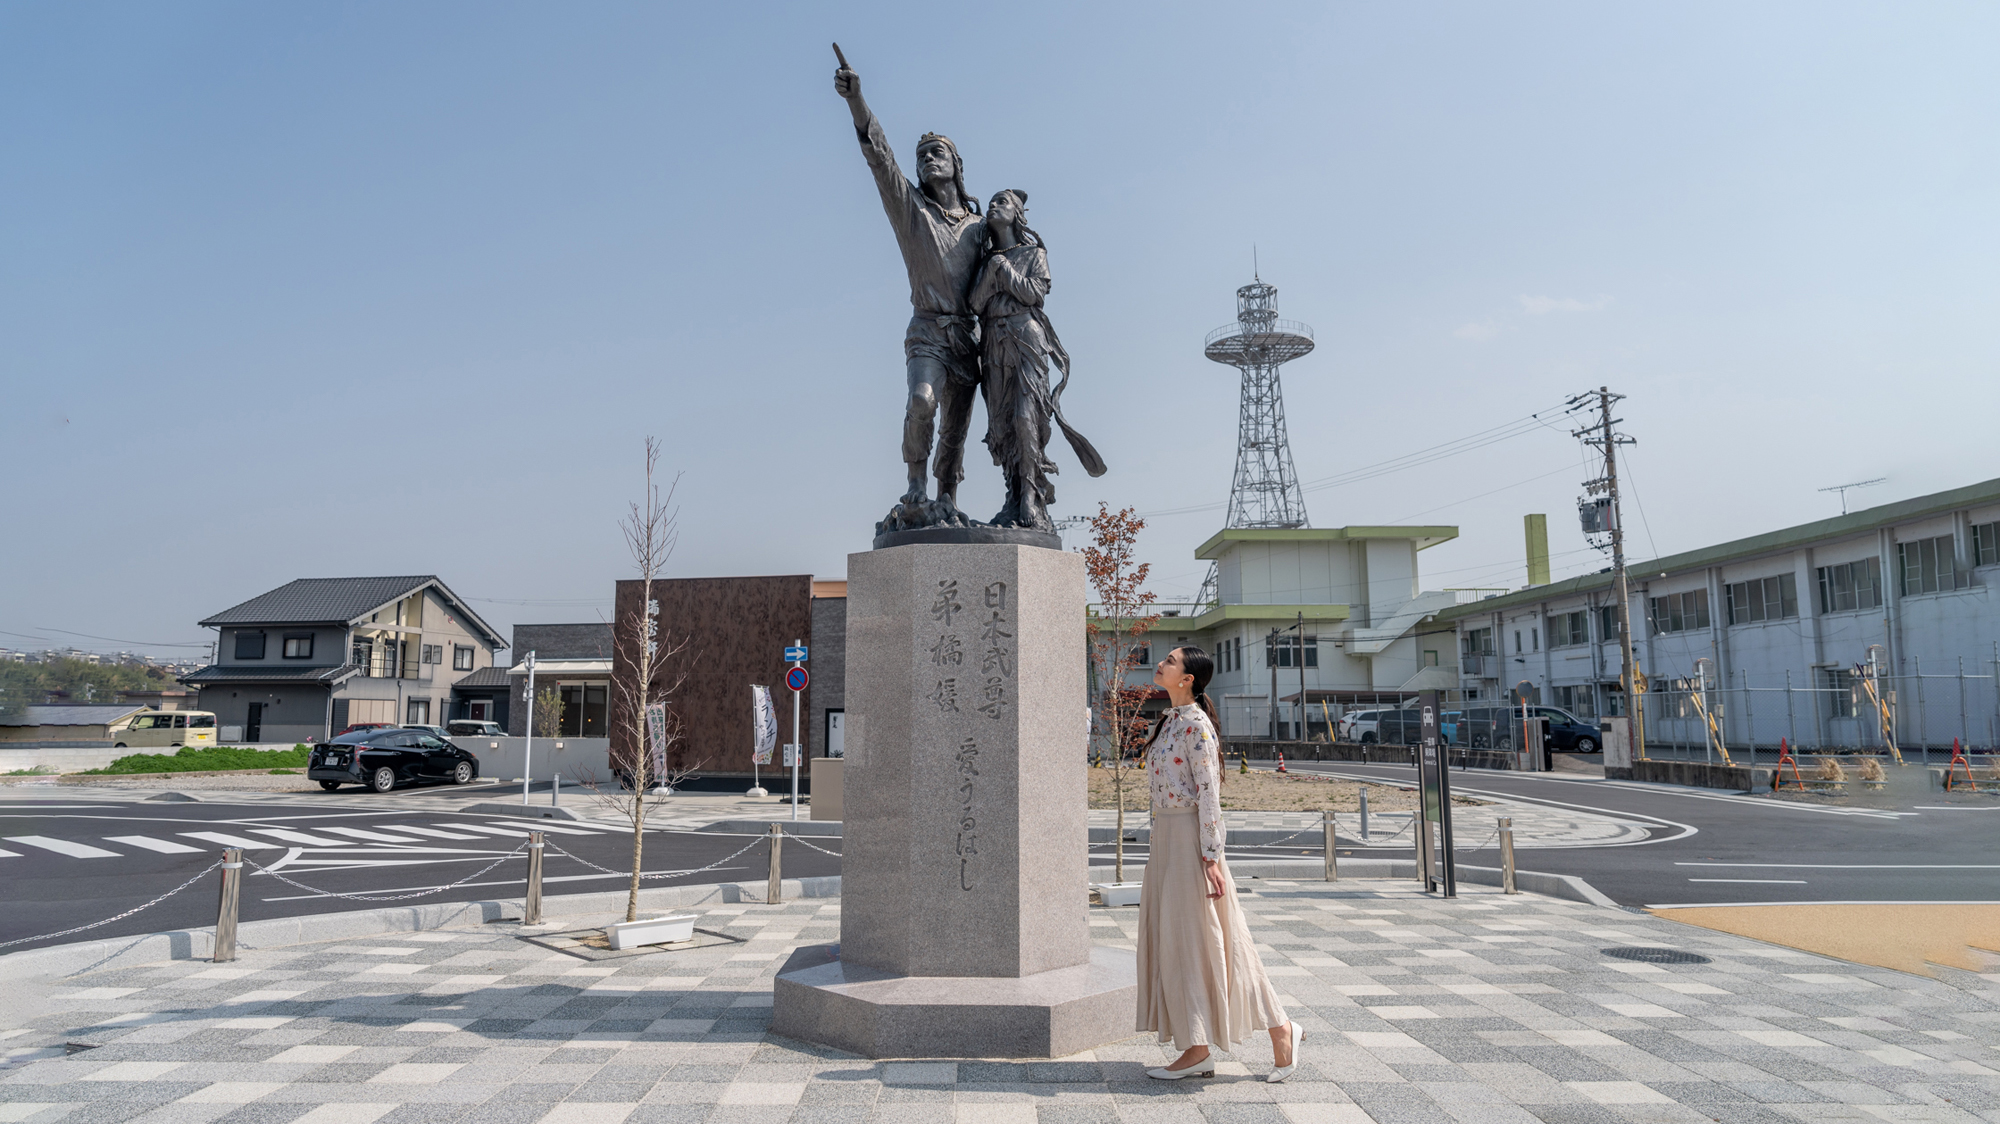 Estatua de bronce de Yamato Takeru Ototachi Banahime